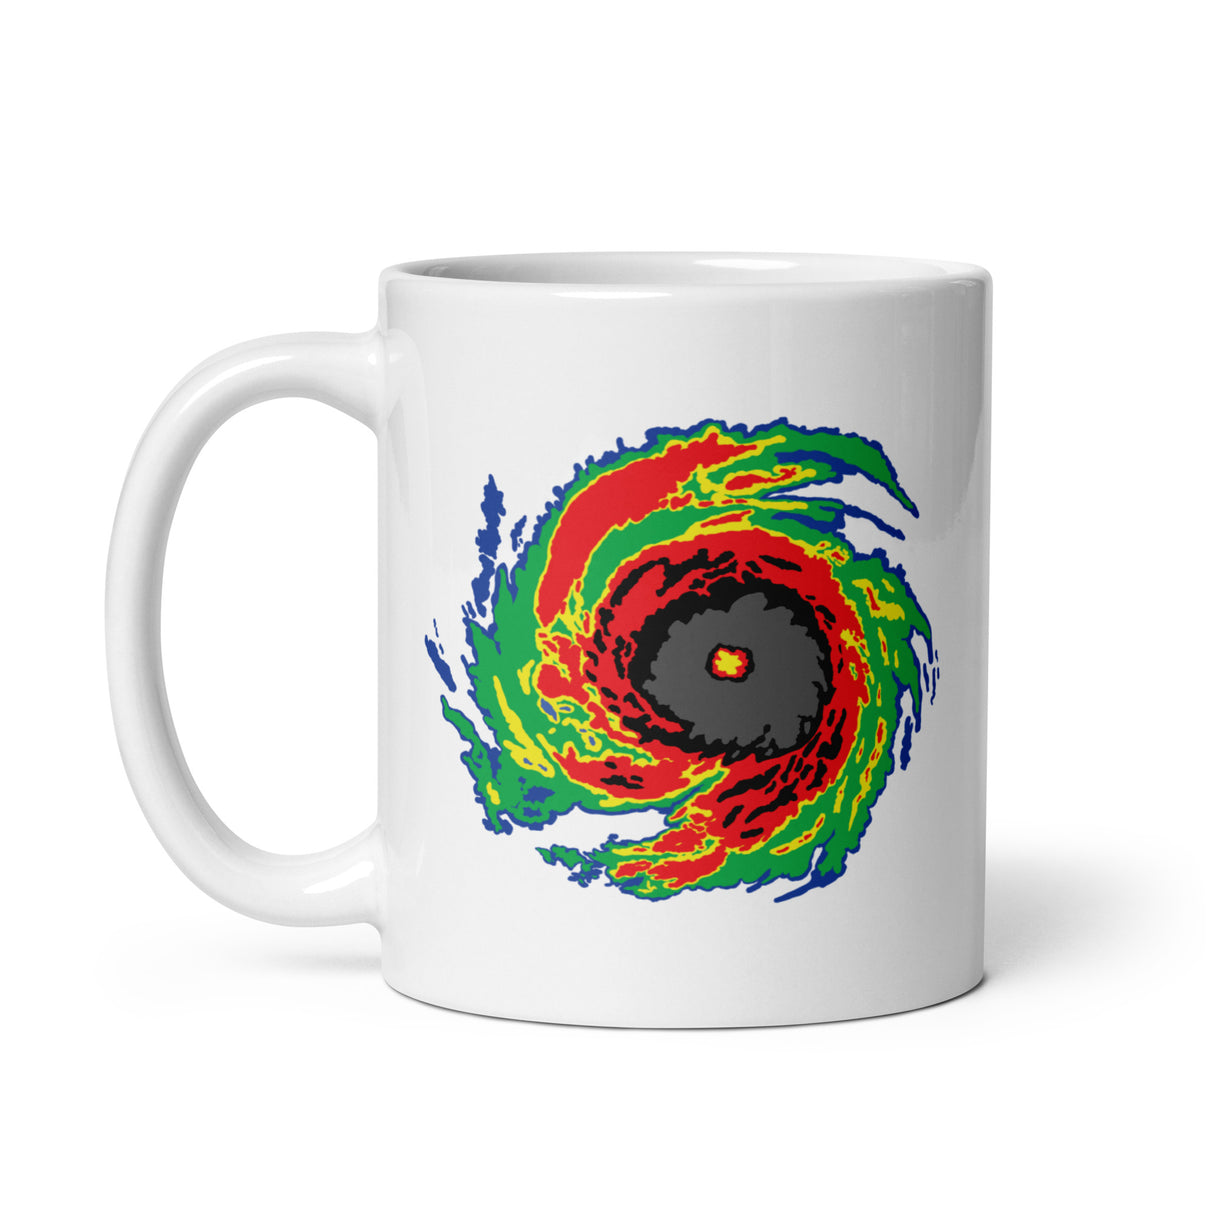 Hurricane White Glossy Mug